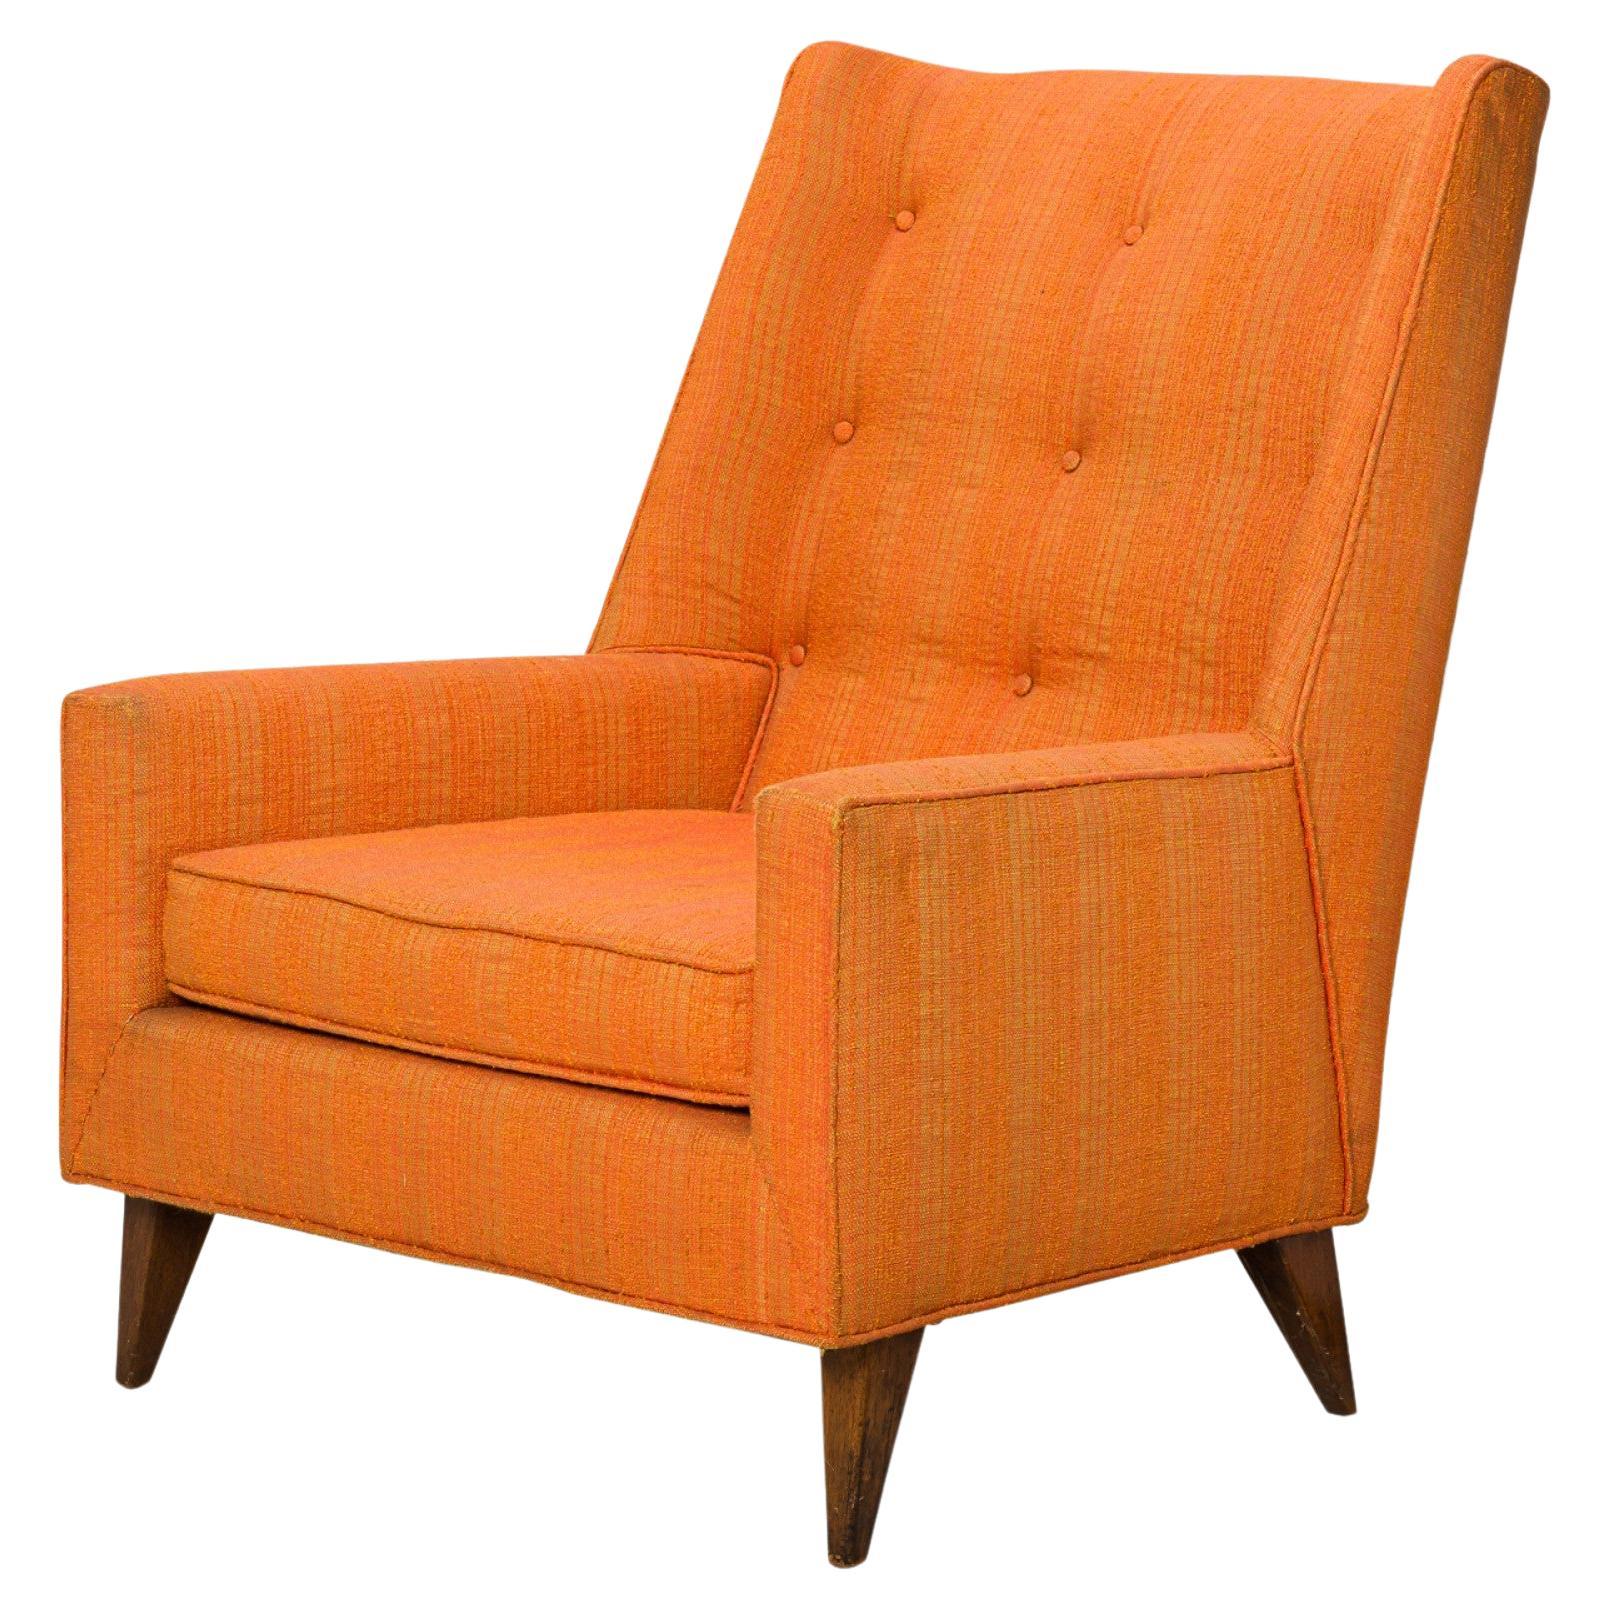 Harvey Probber gepolsterter Sessel mit hoher Rückenlehne aus orangefarbenem Stoff / Loungesessel